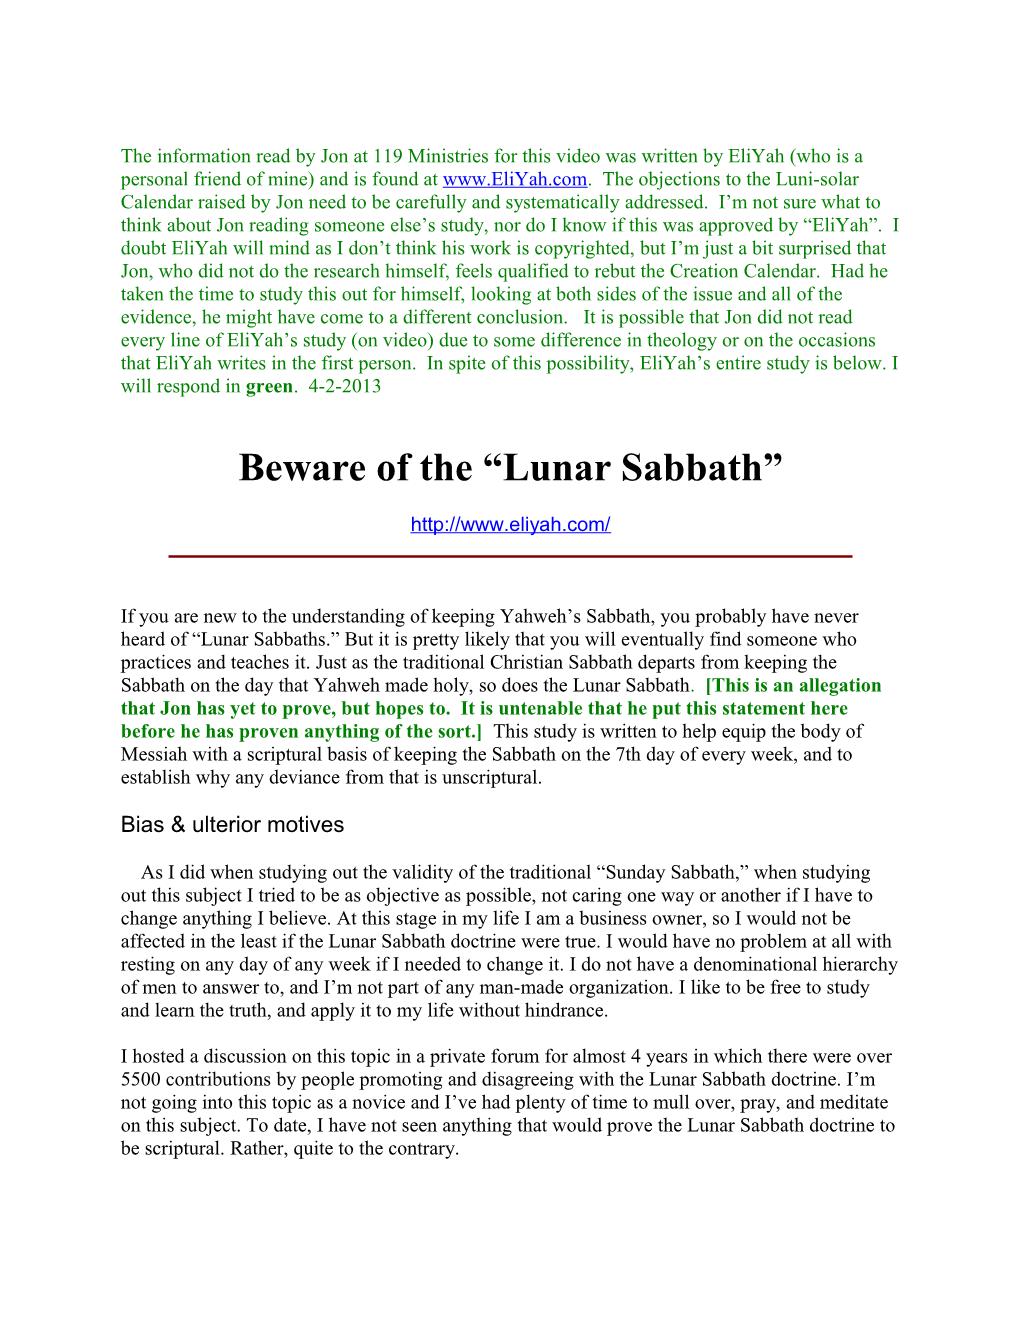 Beware of the Lunar Sabbath